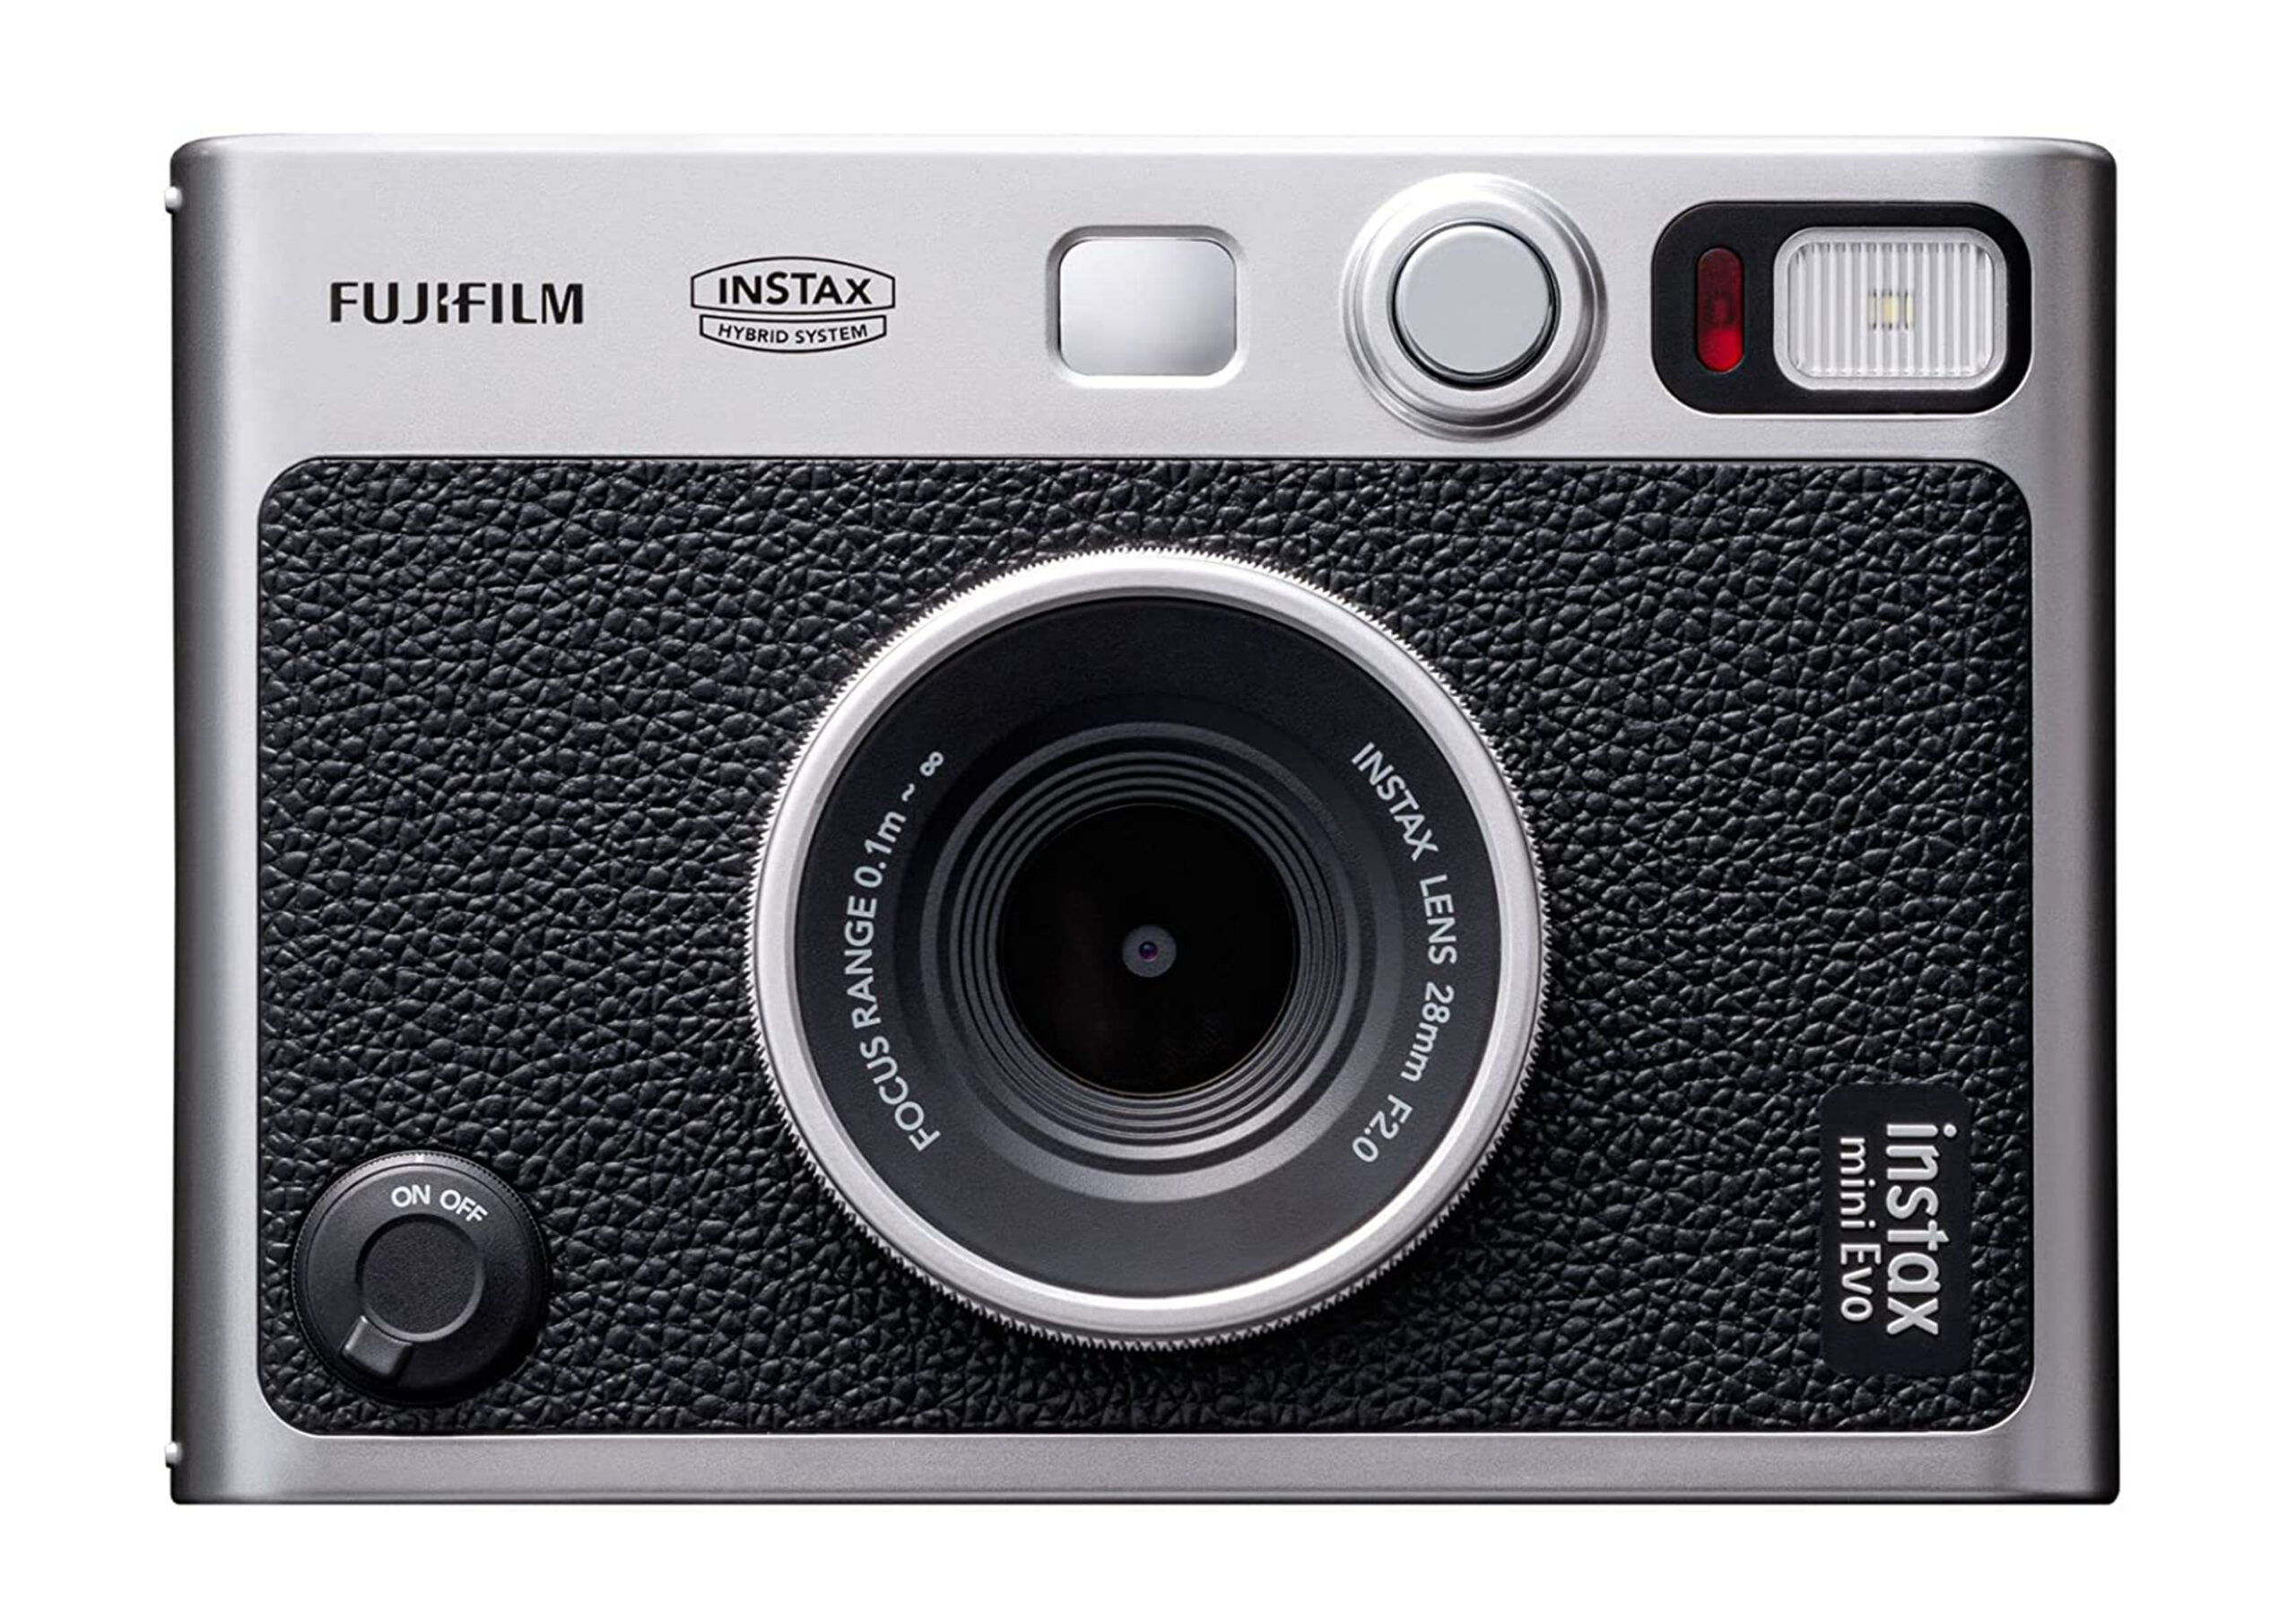 Fujifilm Instax Mini Evo Hybrid review